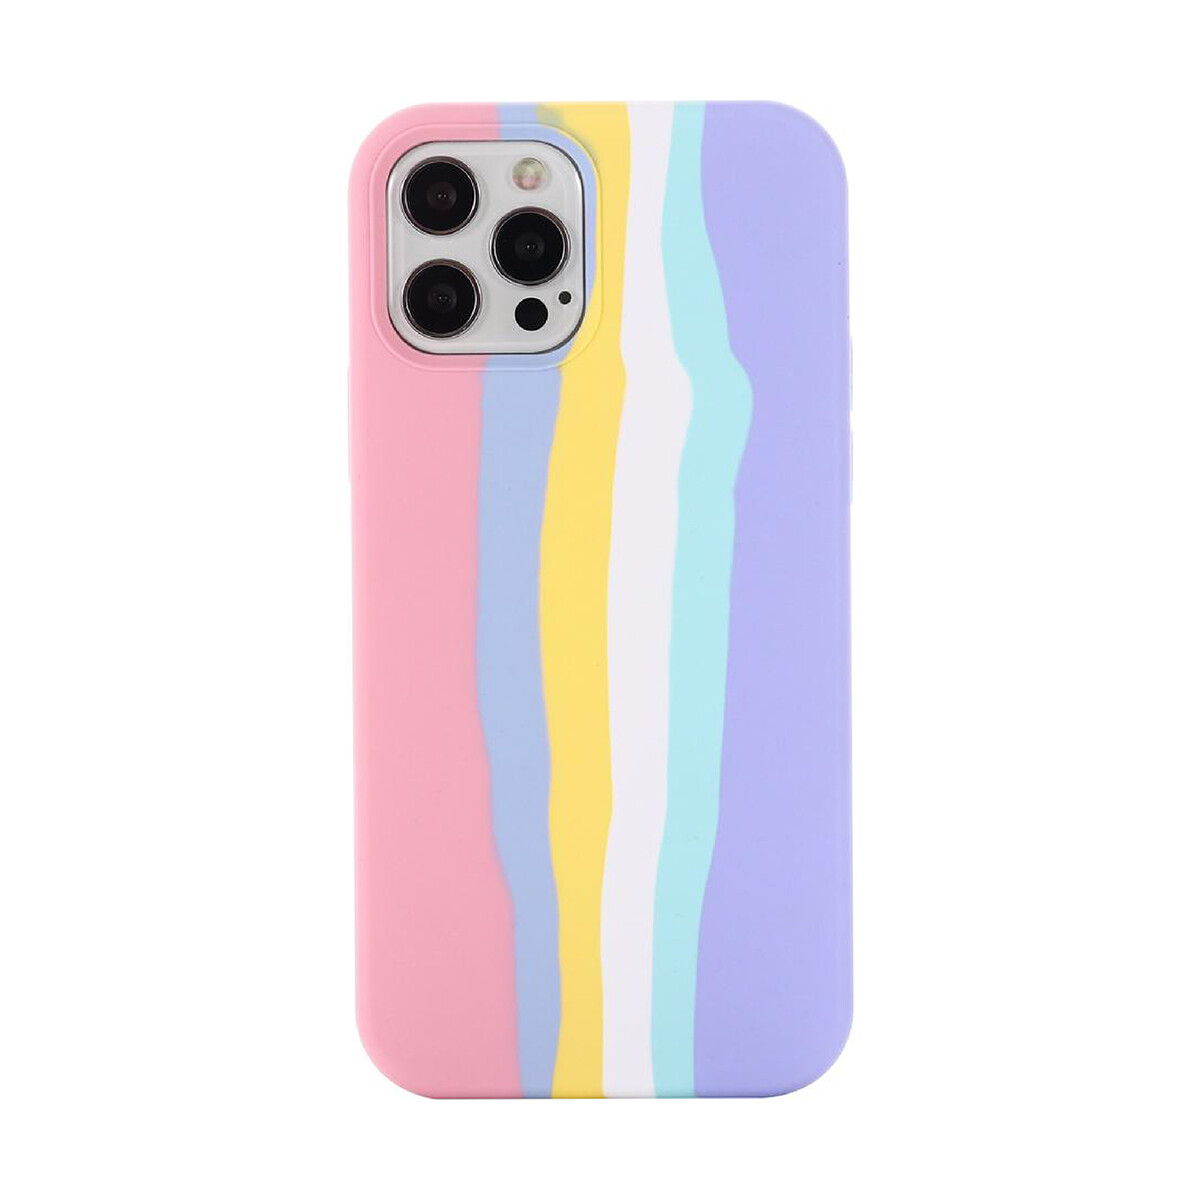 Silicone case iphone 12 pro max - Arcoiris rosado 